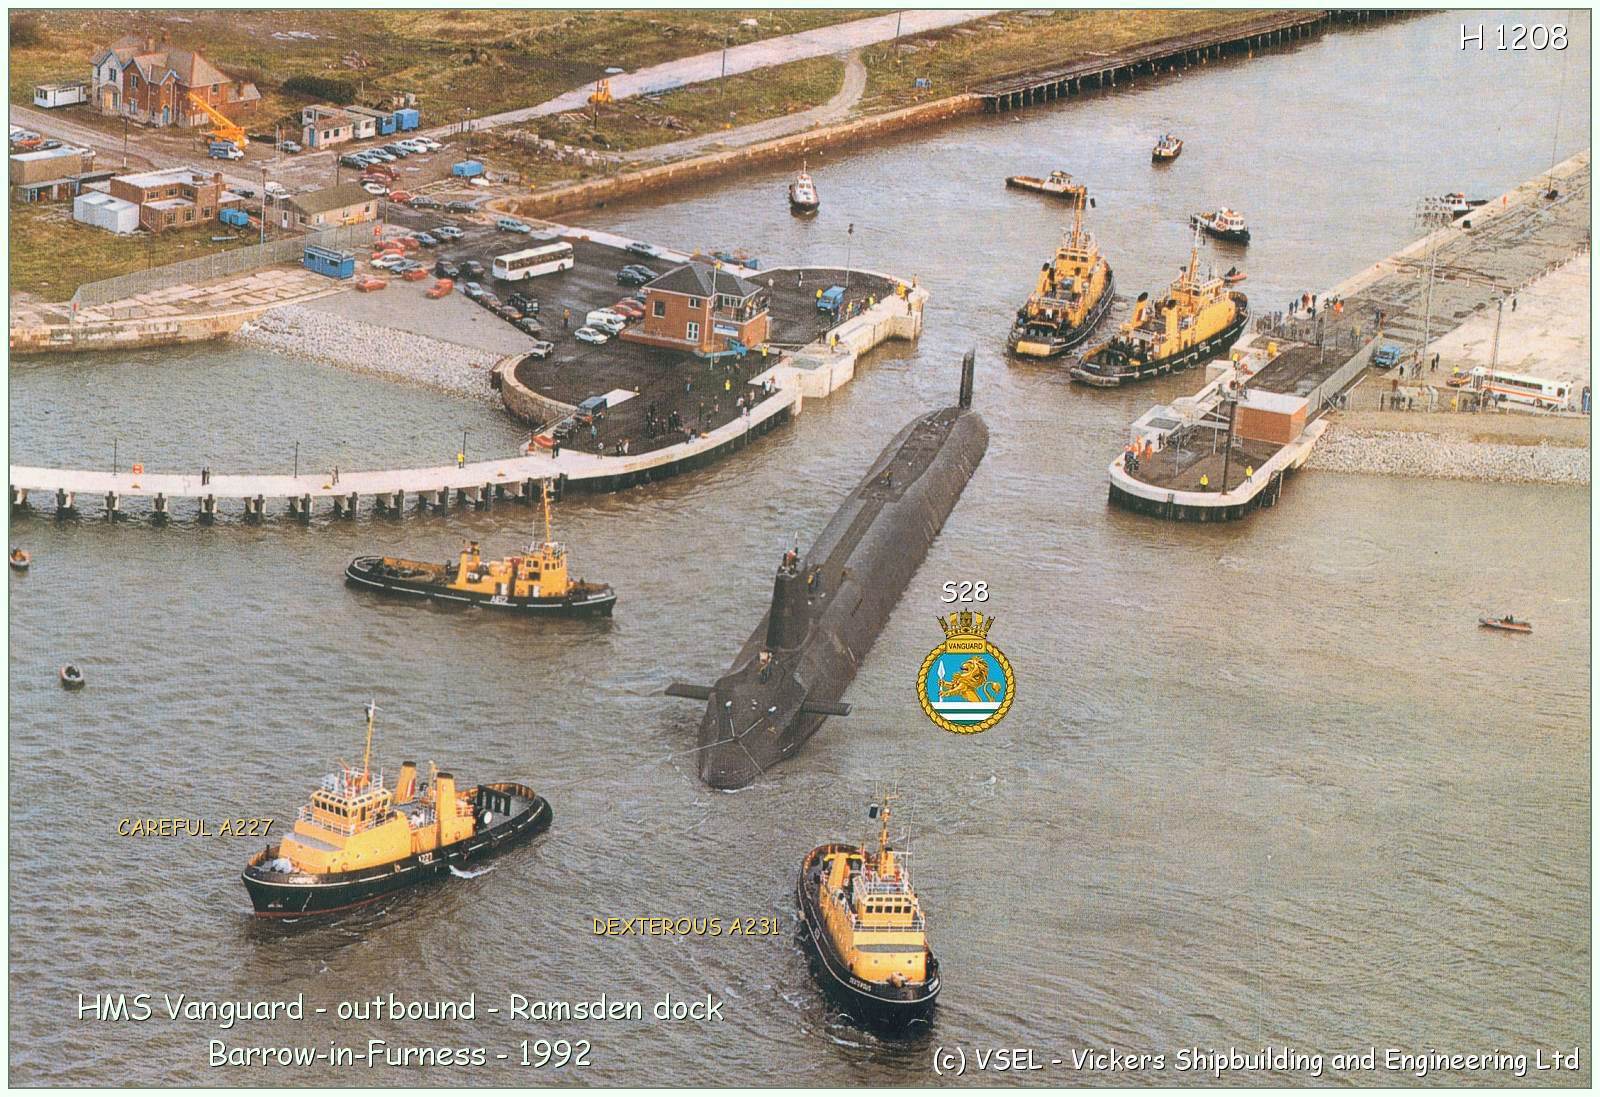 Barrow-in-Furness - Outbound - Ramden Dock - 1992